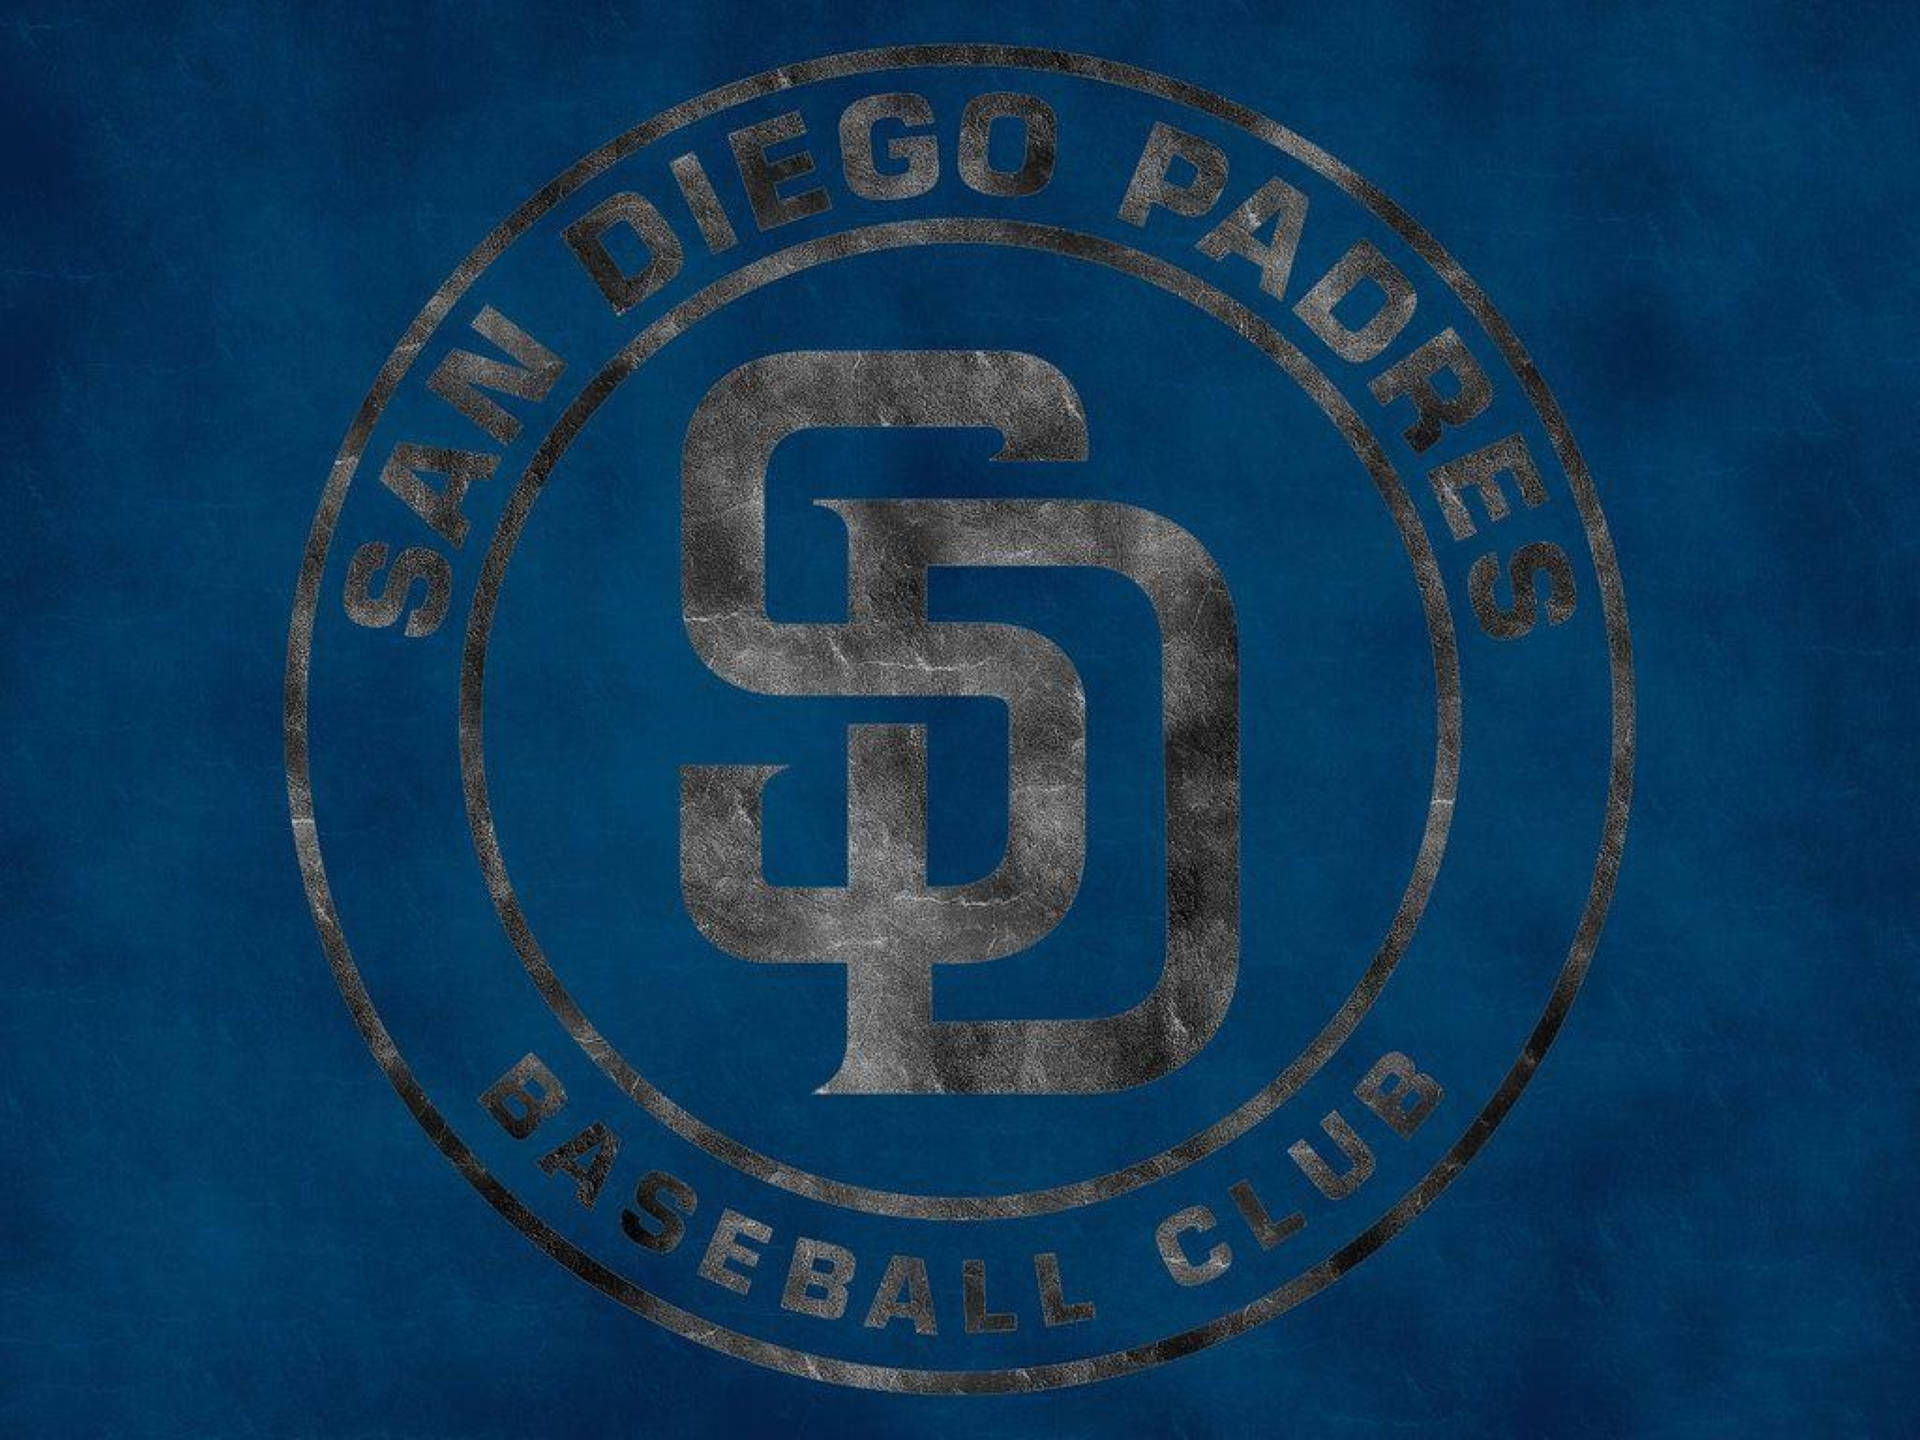 San Diego Padres Baseball Club